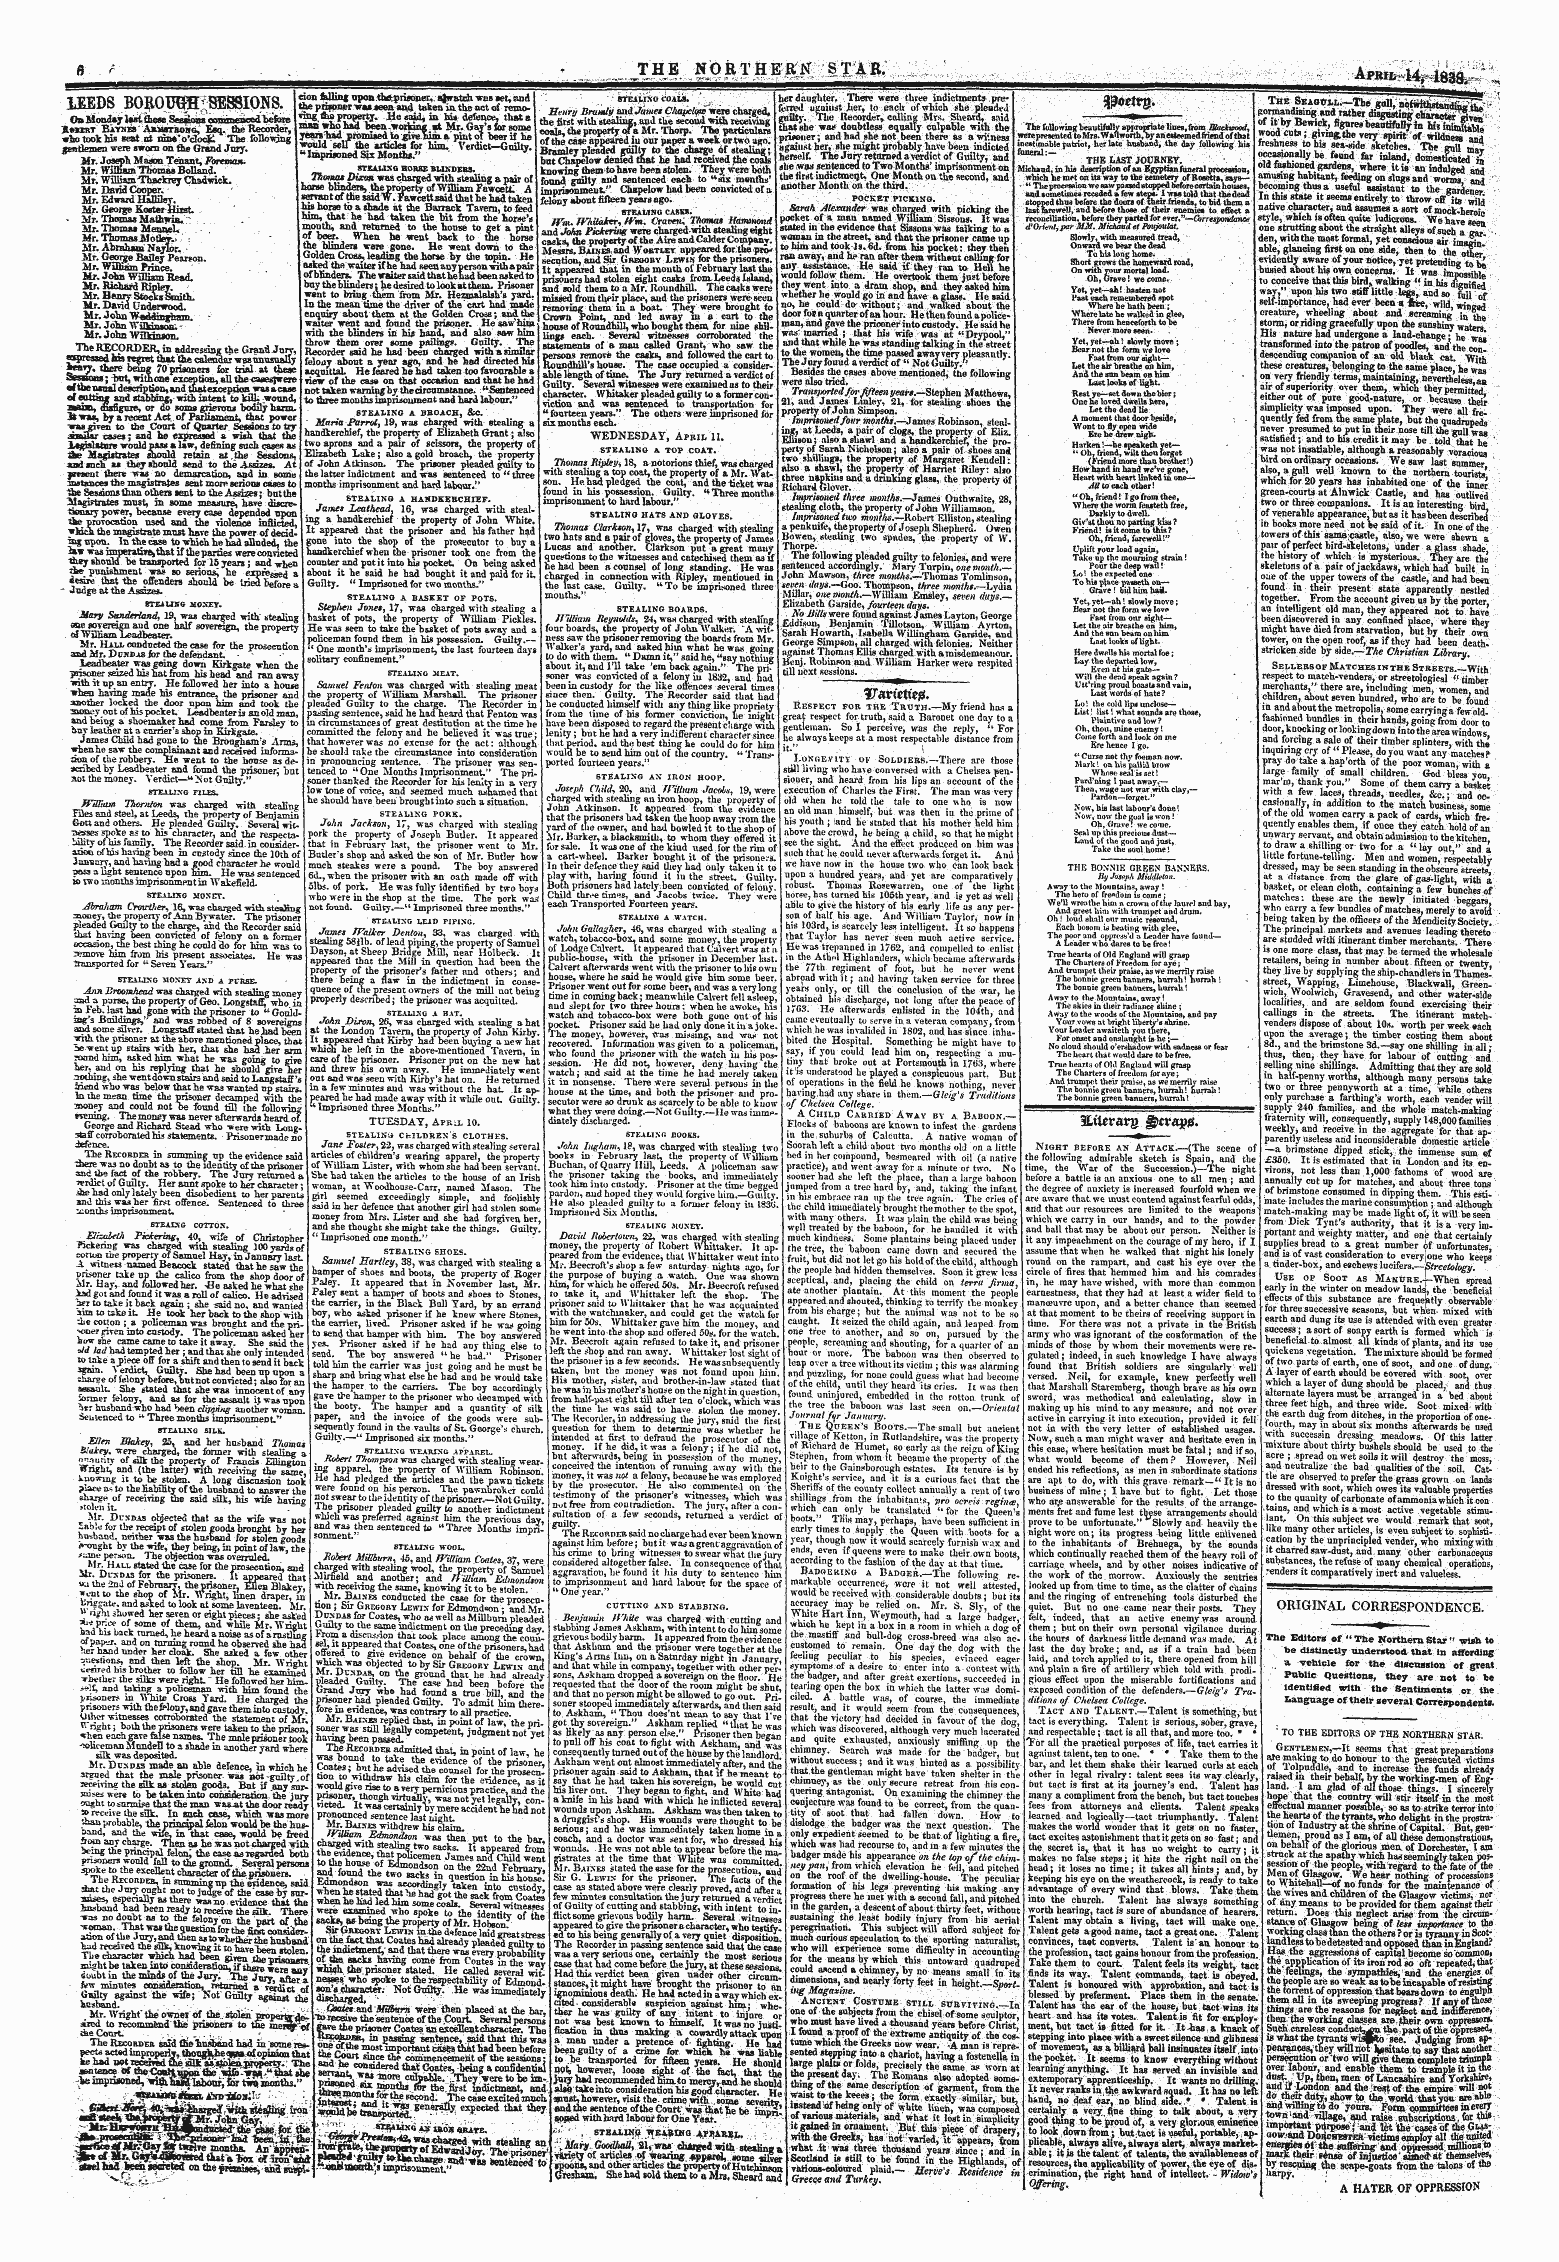 Northern Star (1837-1852): jS F Y, 1st edition - Wliuvav^ &C?A $$.